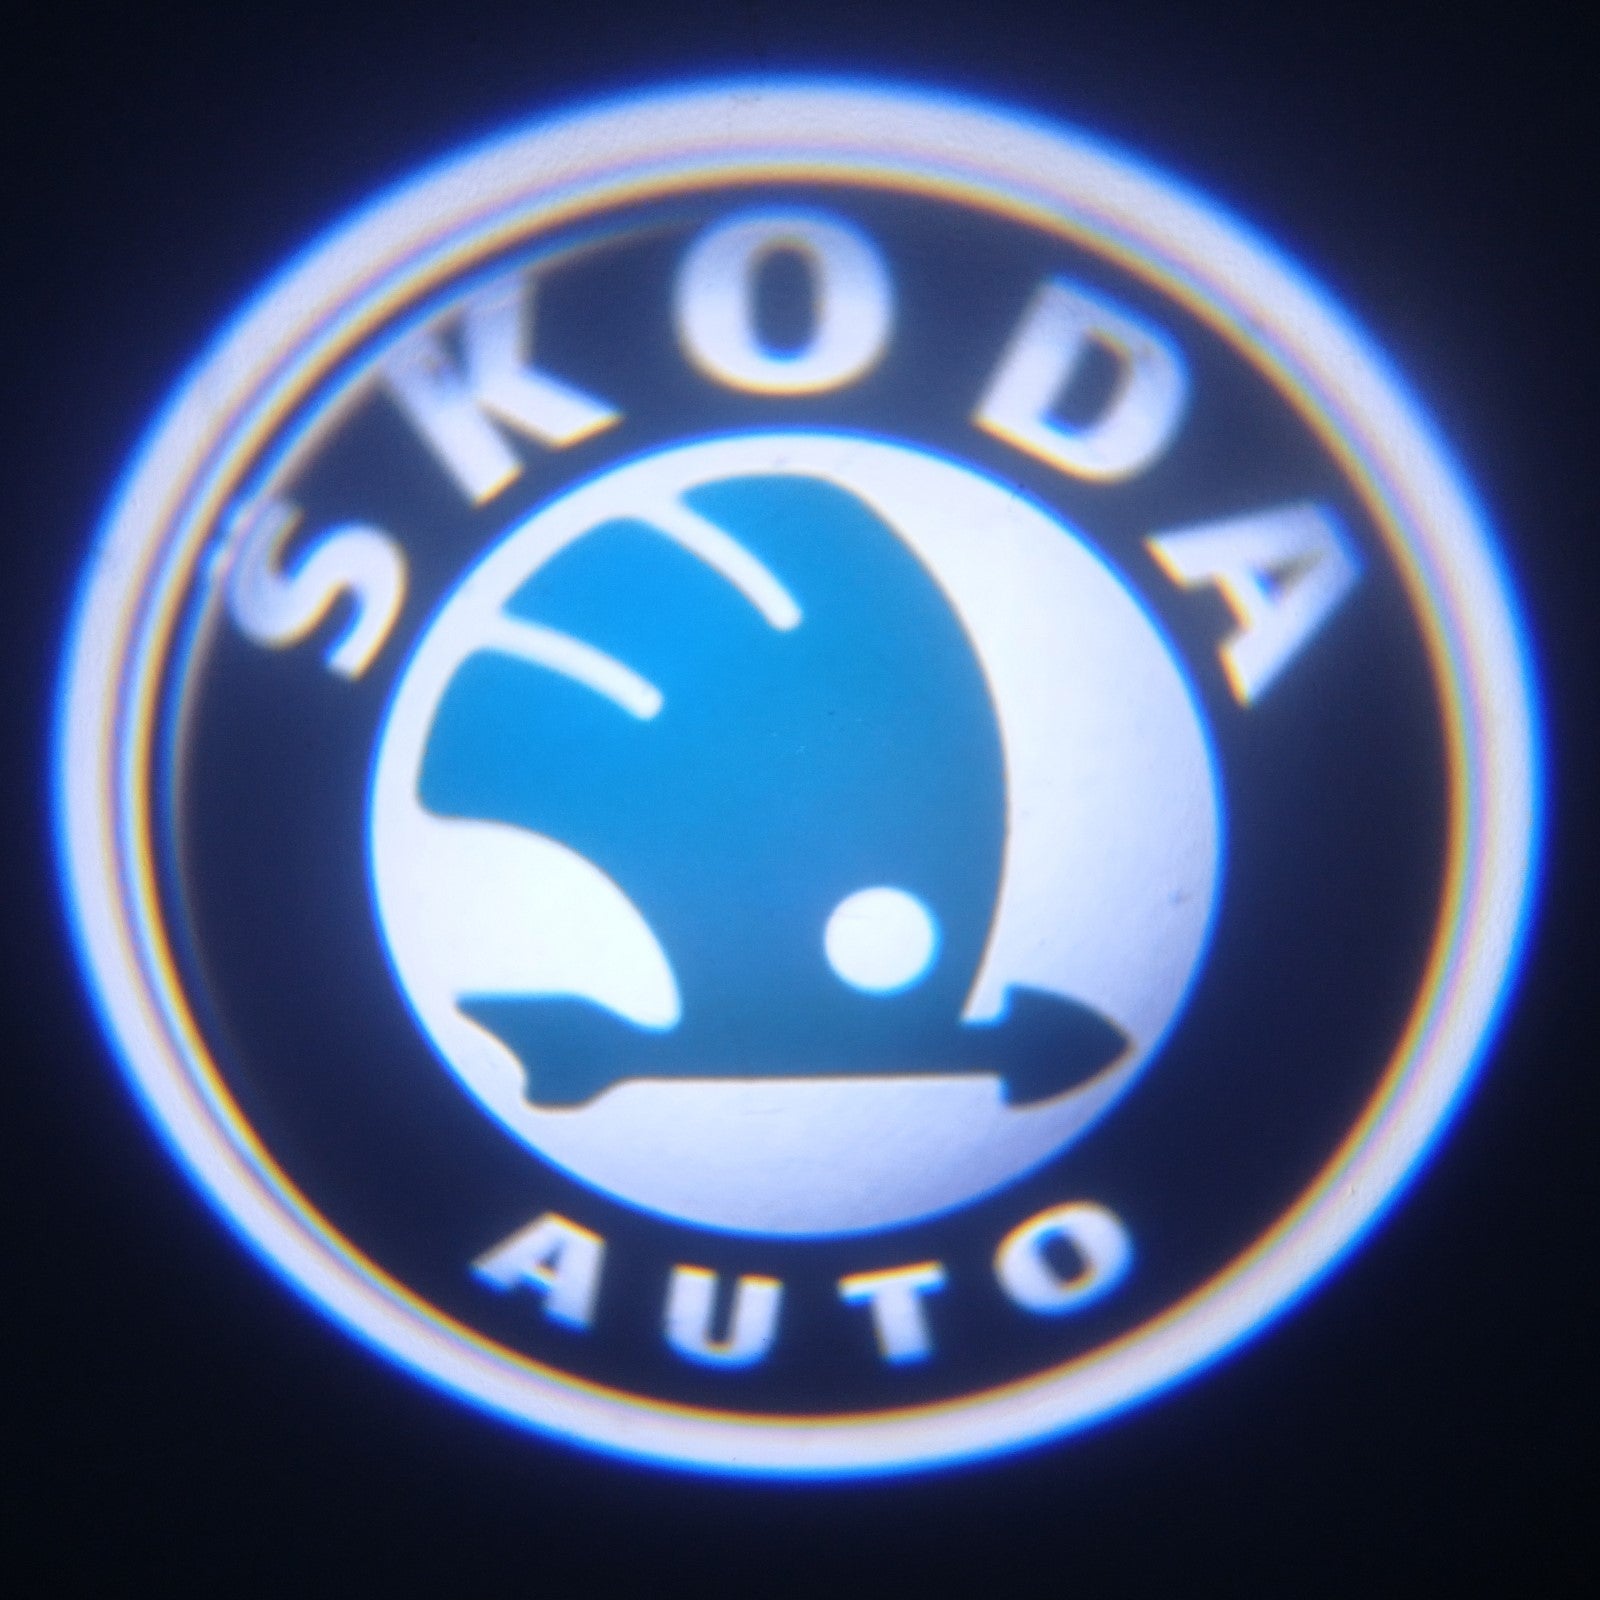 Luzes Cortesia com Logotipo marca Skoda